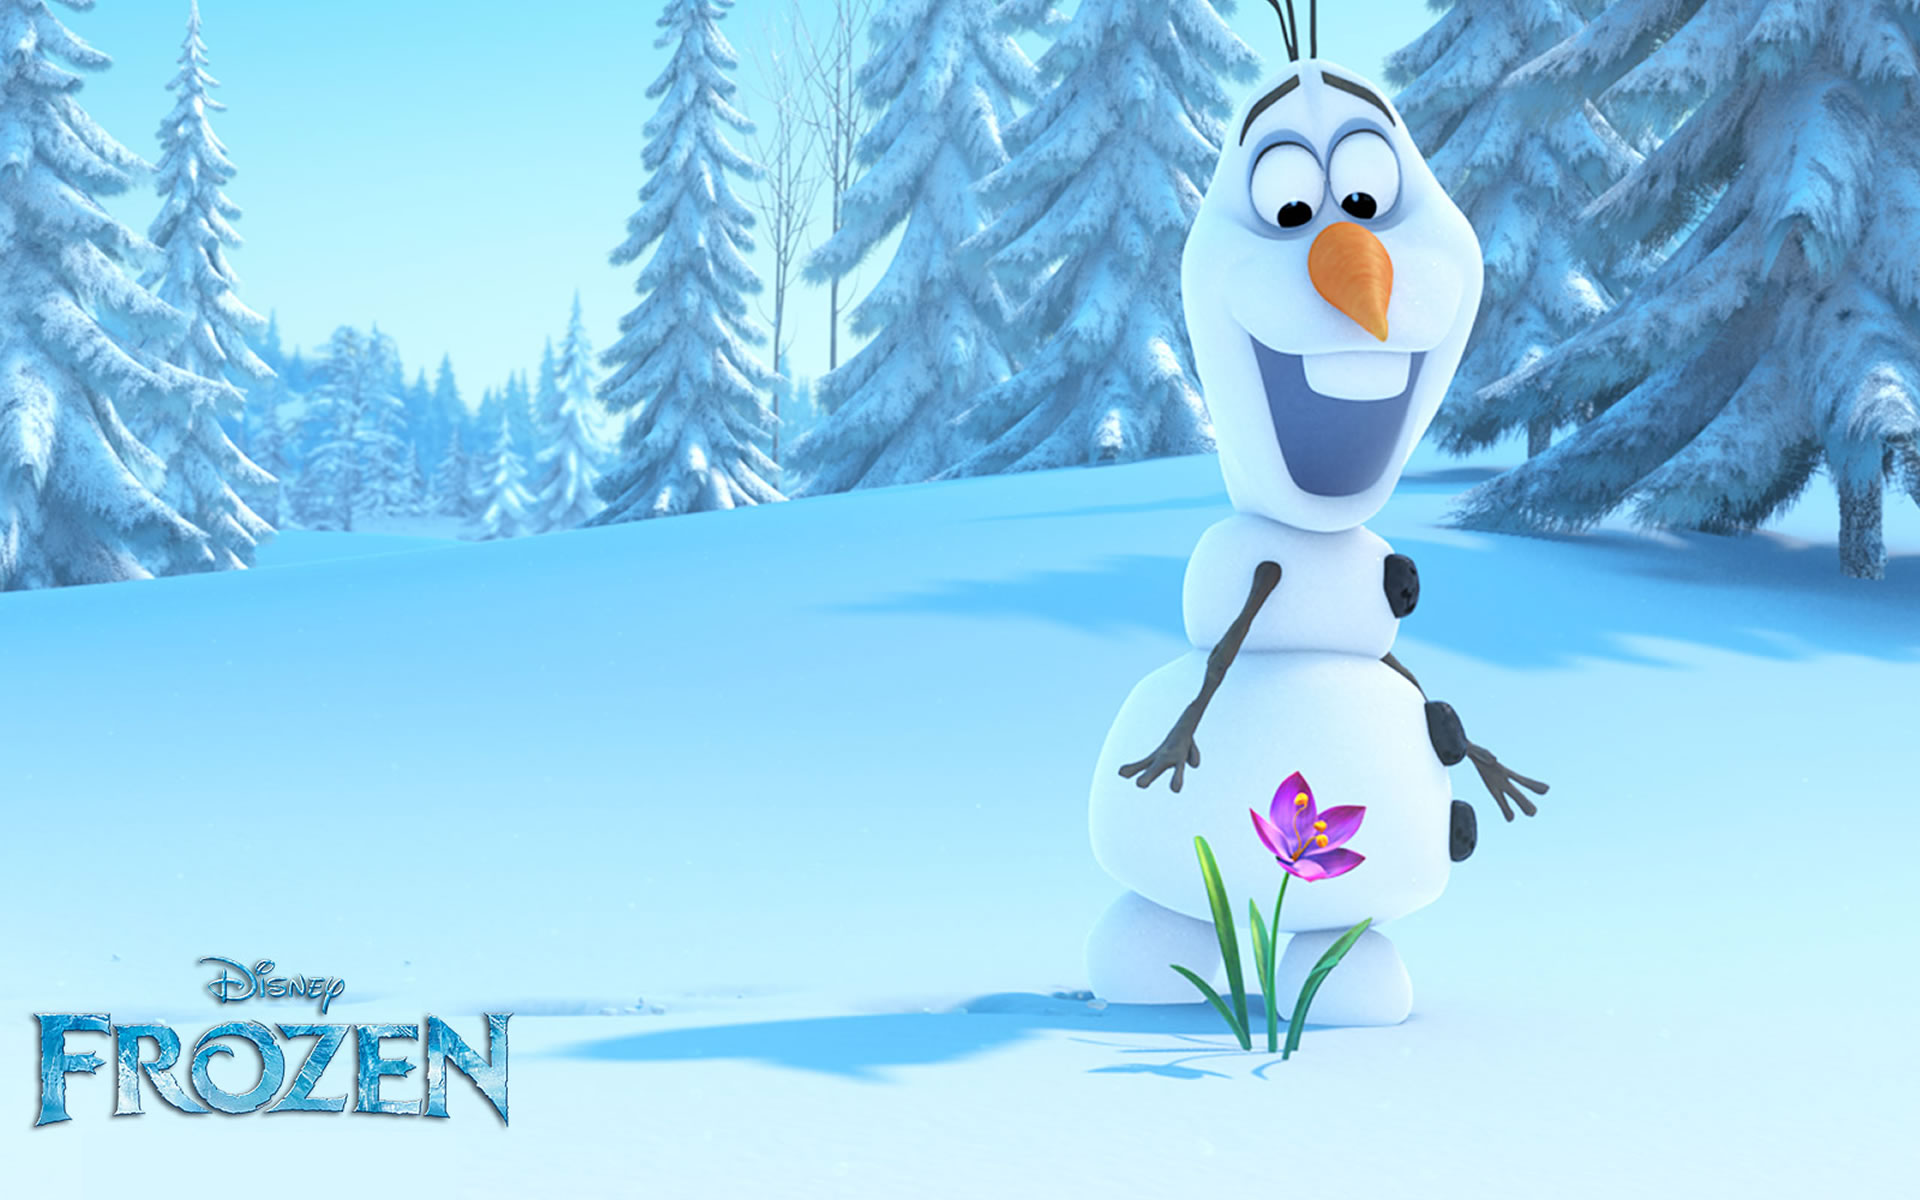 download wallpaper: Frozen Olaf de sneeuwman wallpaper